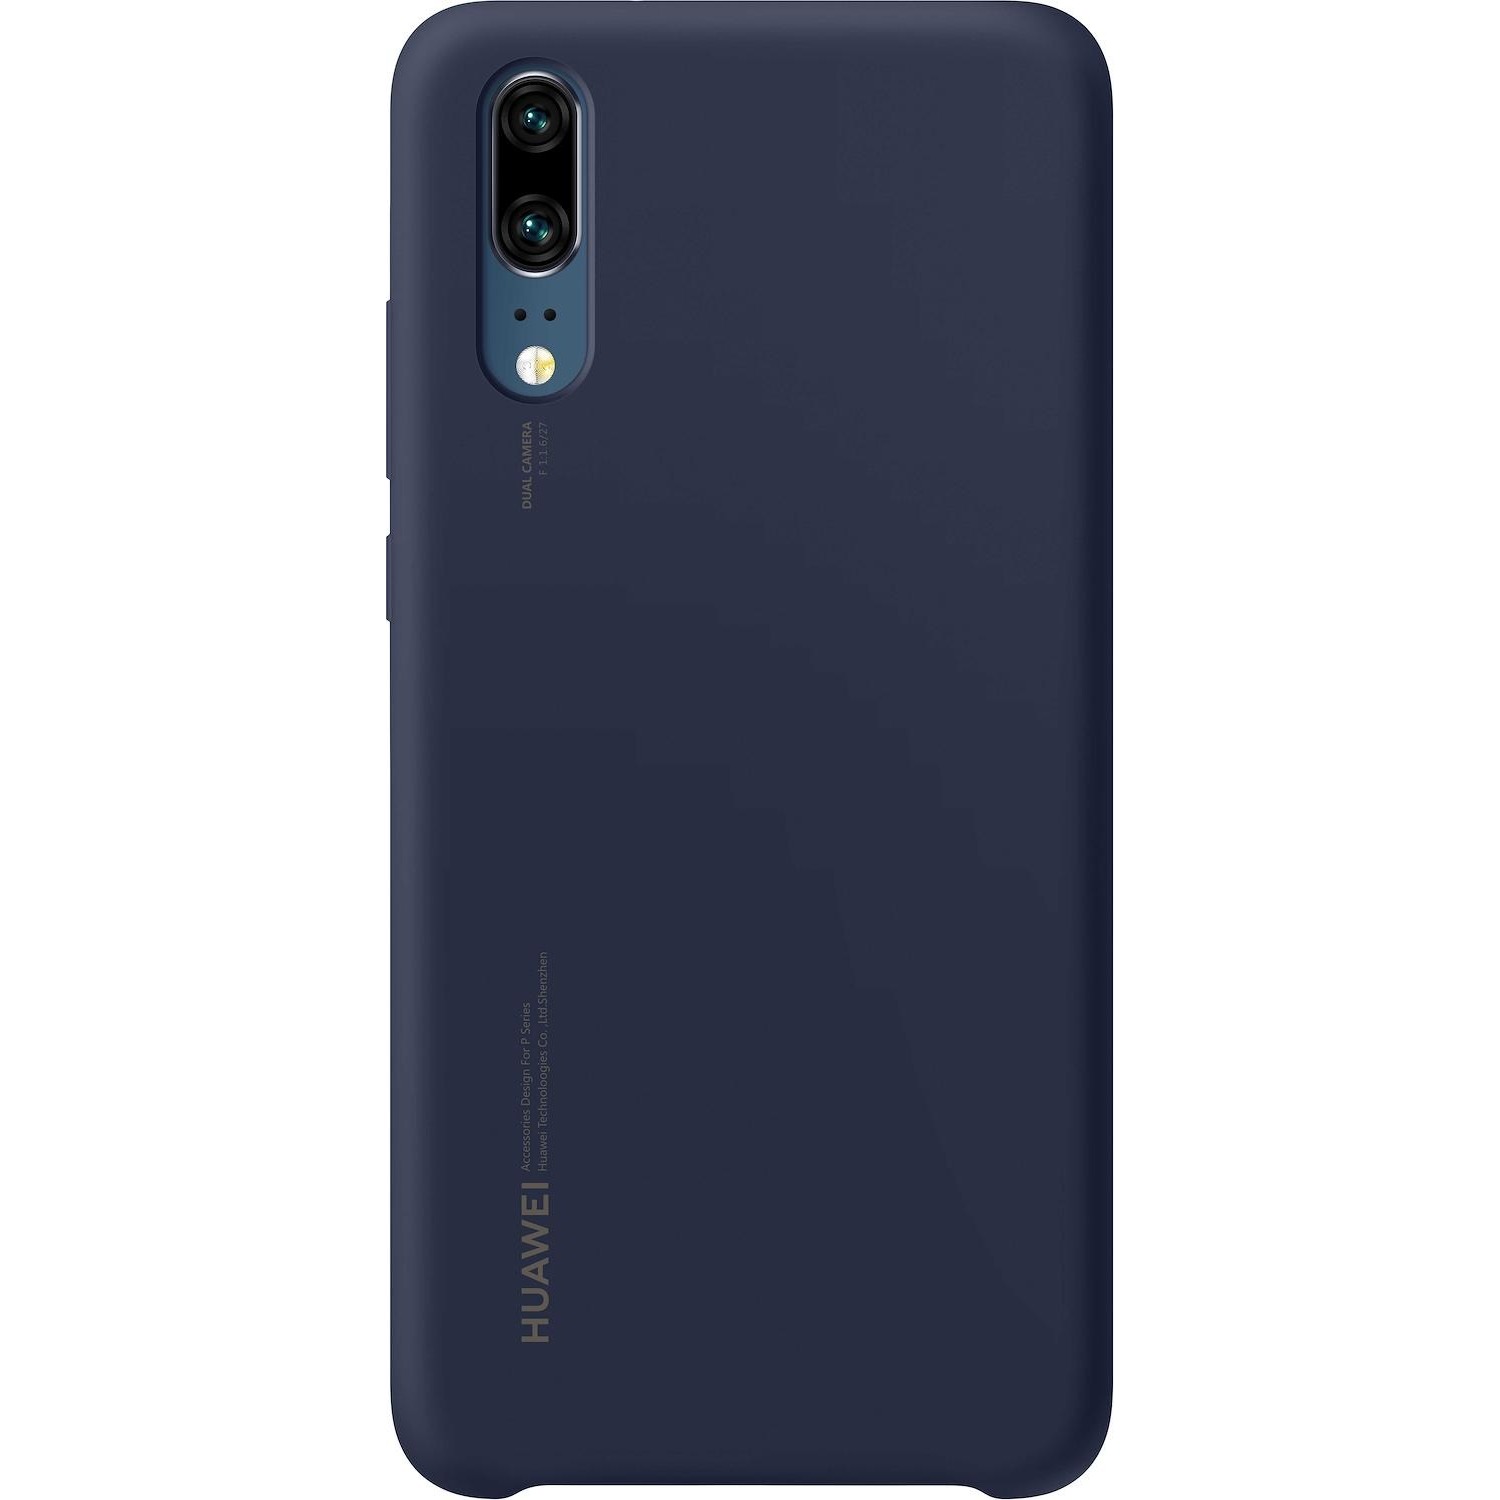 Immagine per Silicon gel case per Huawei P20 colore blu da DIMOStore